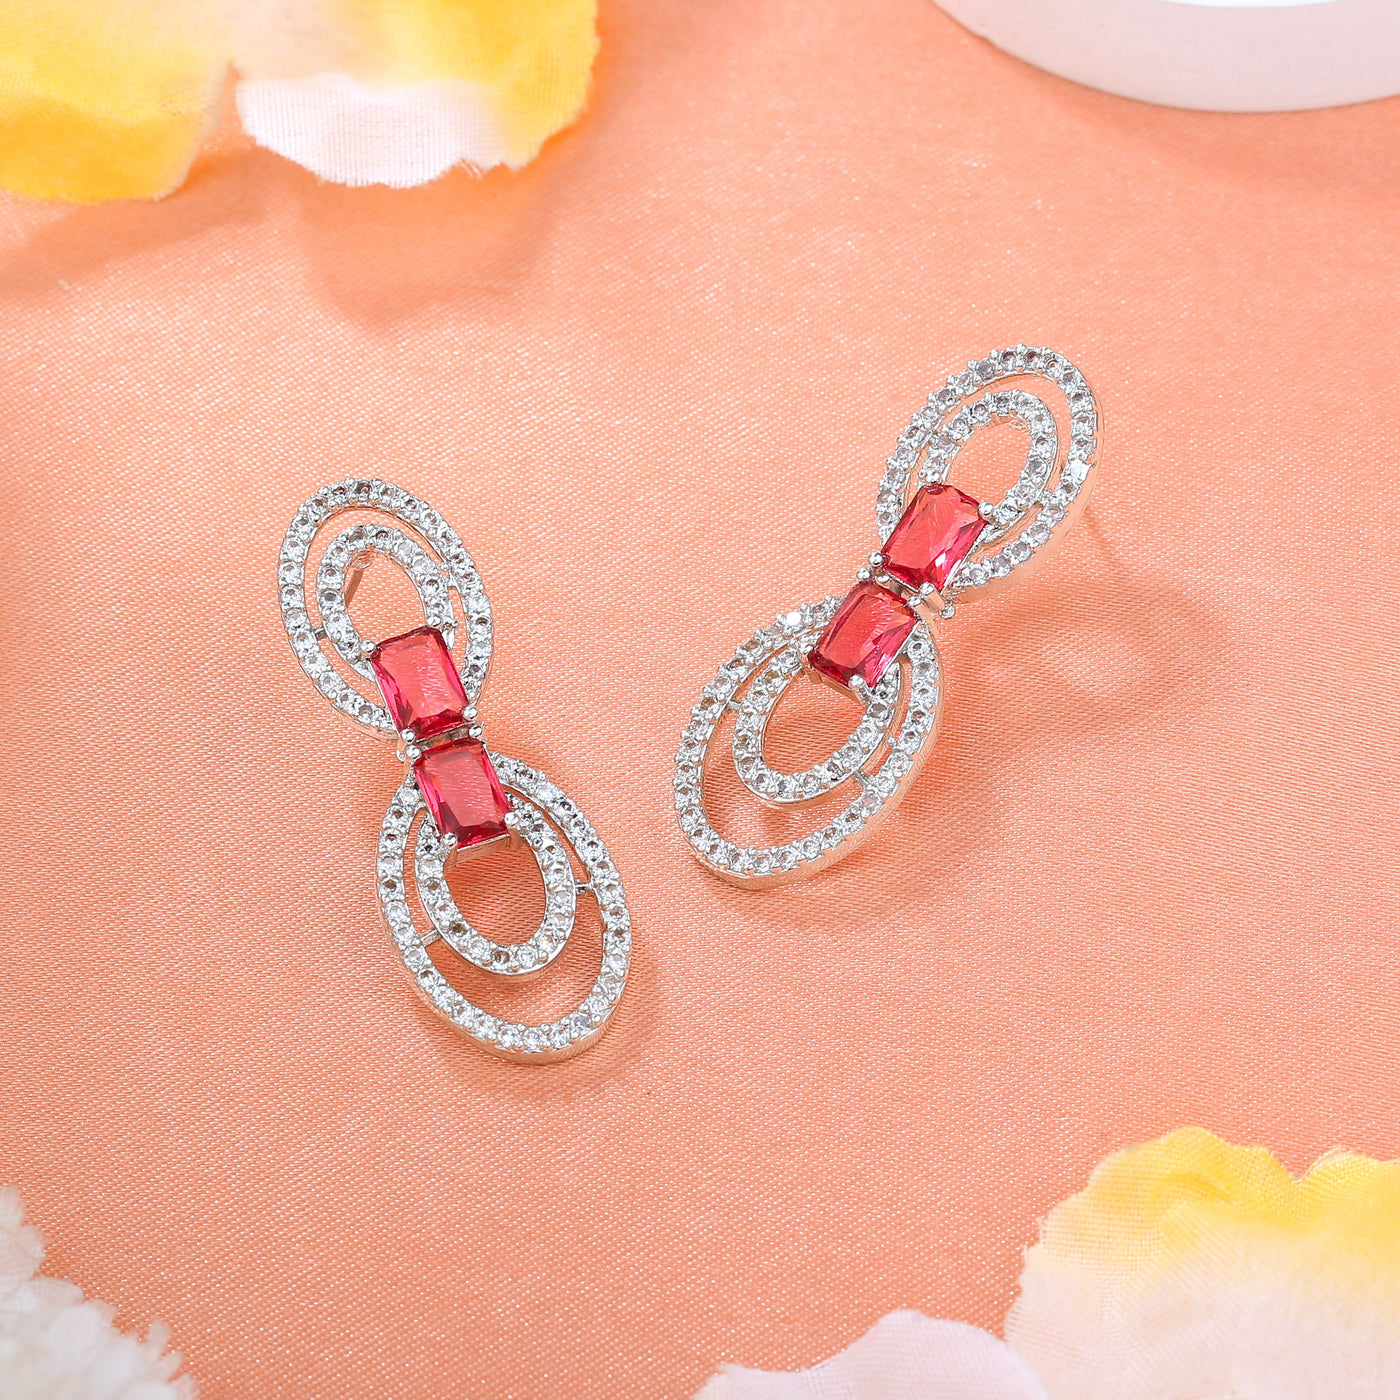 Estele Rhodium Plated CZ Circular Designer Drop Earrings with Tourmaline Pink Stones for Women